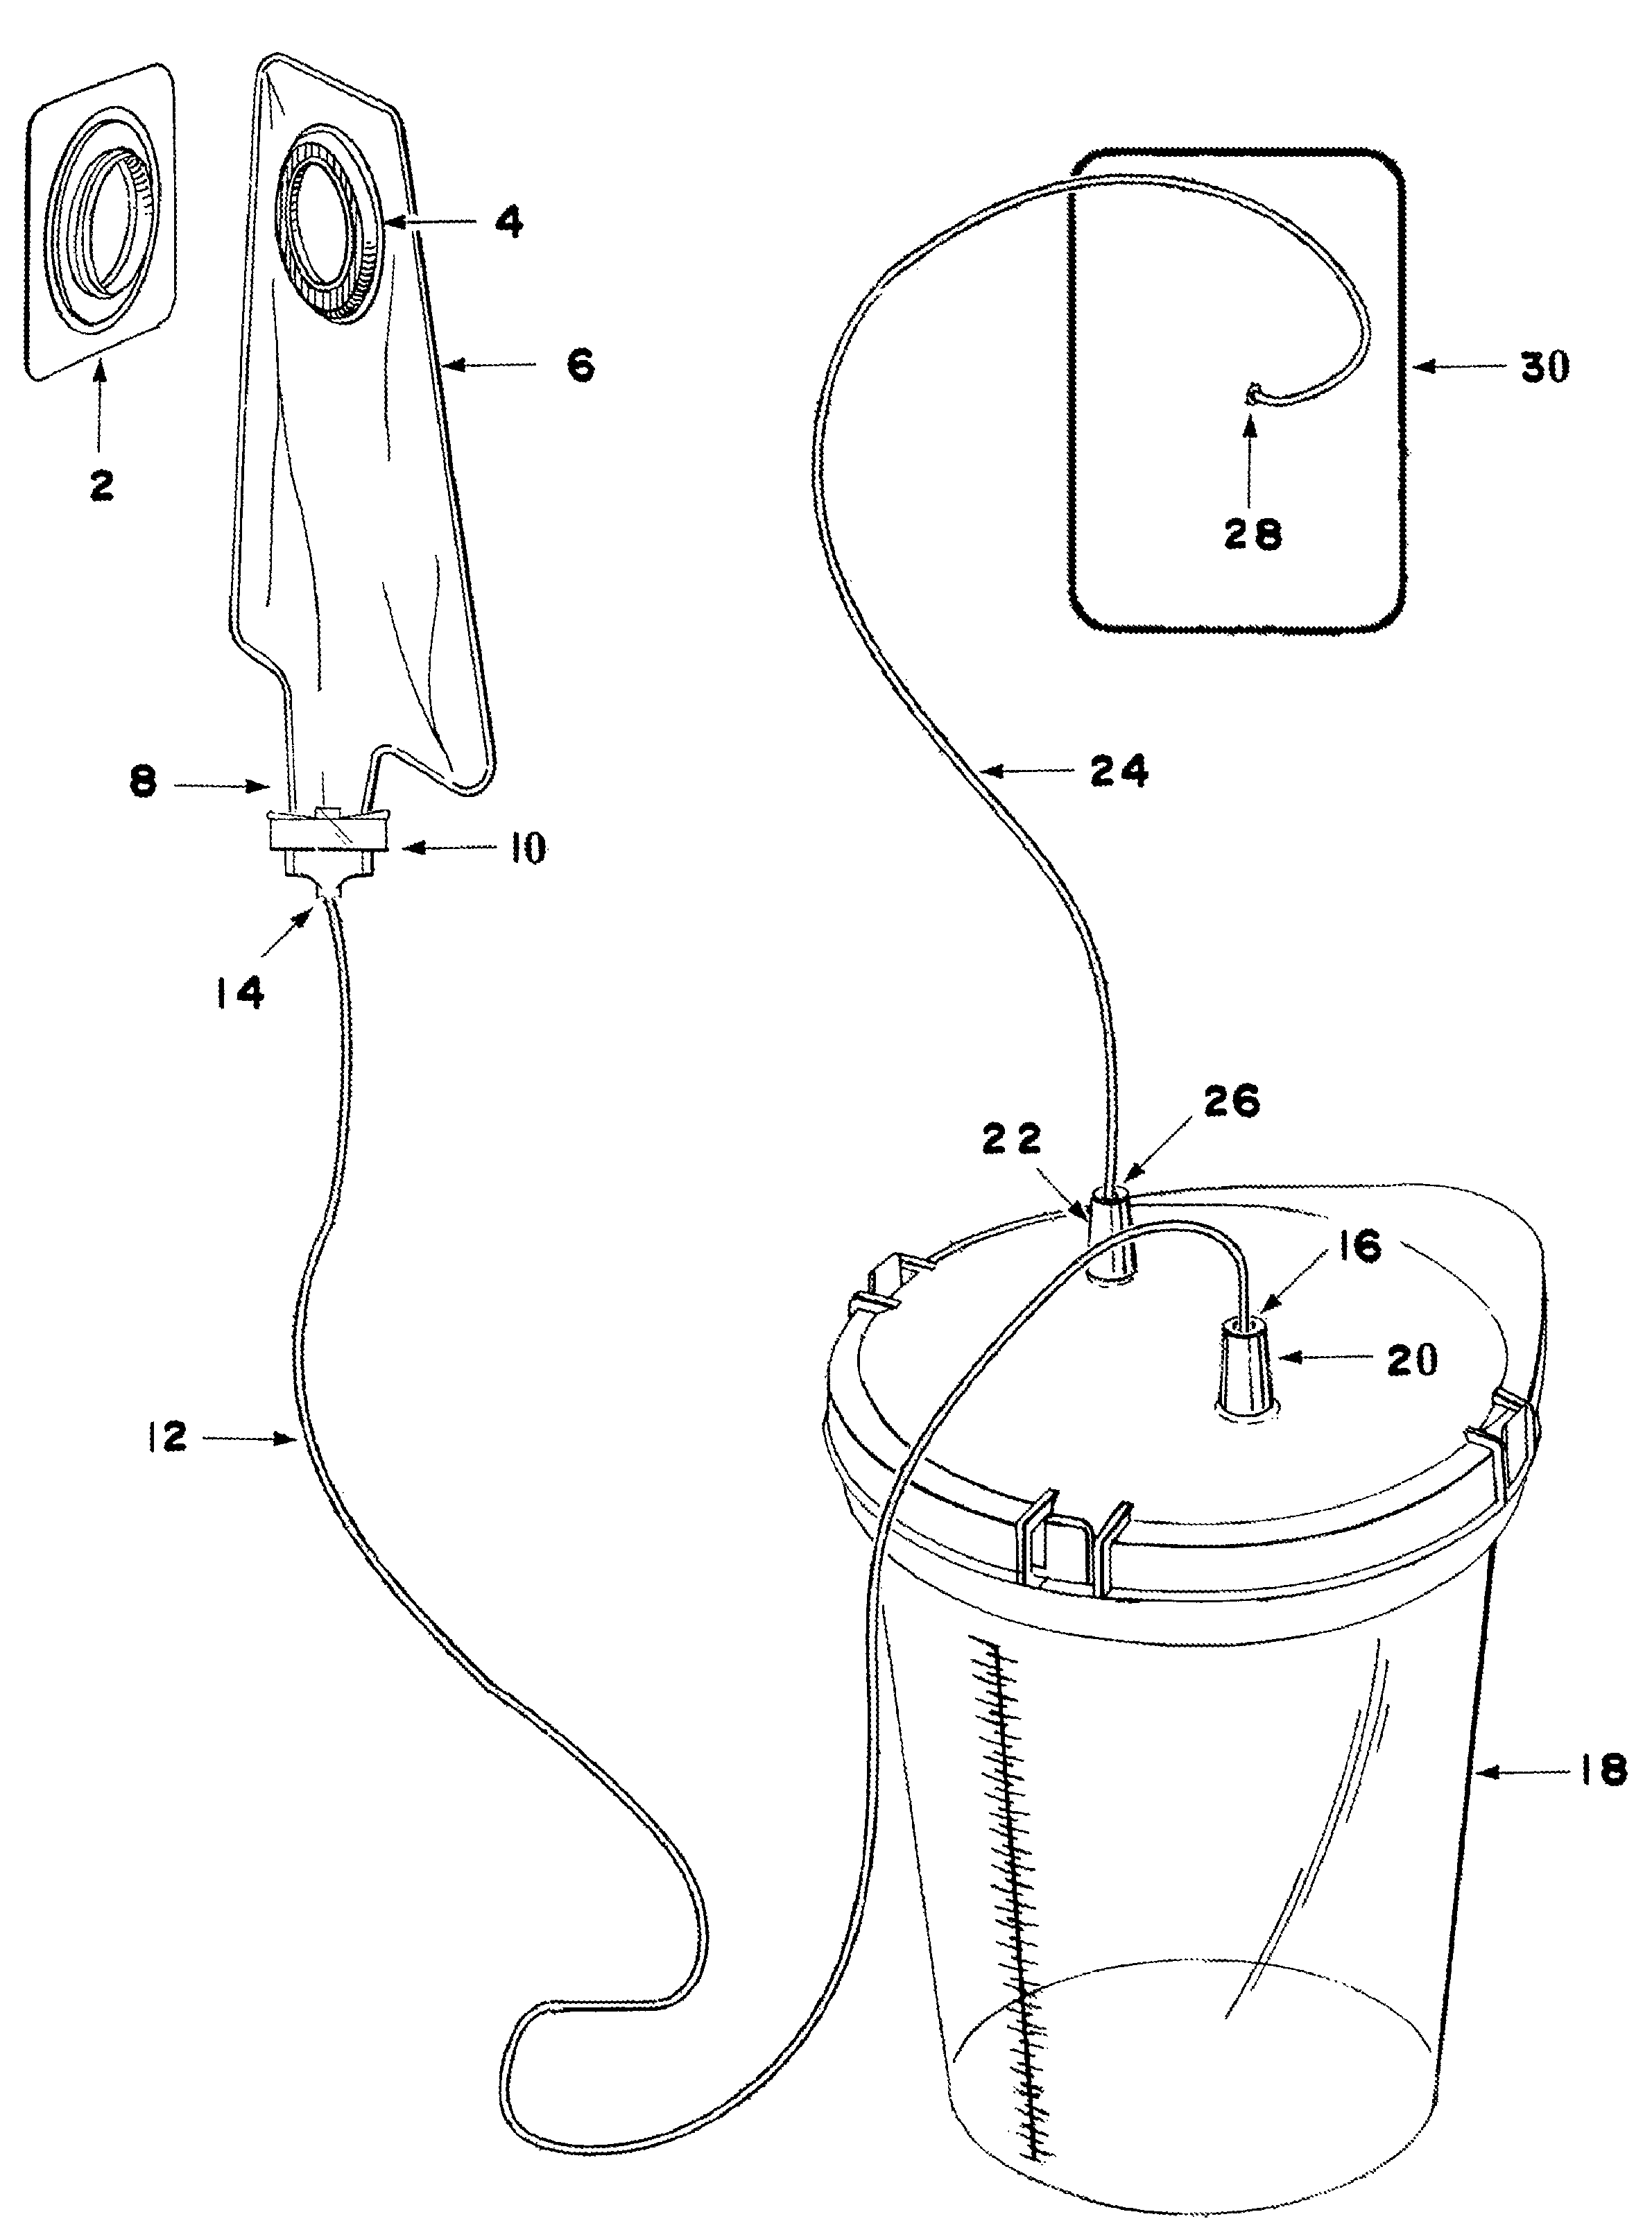 Ostomy suction system